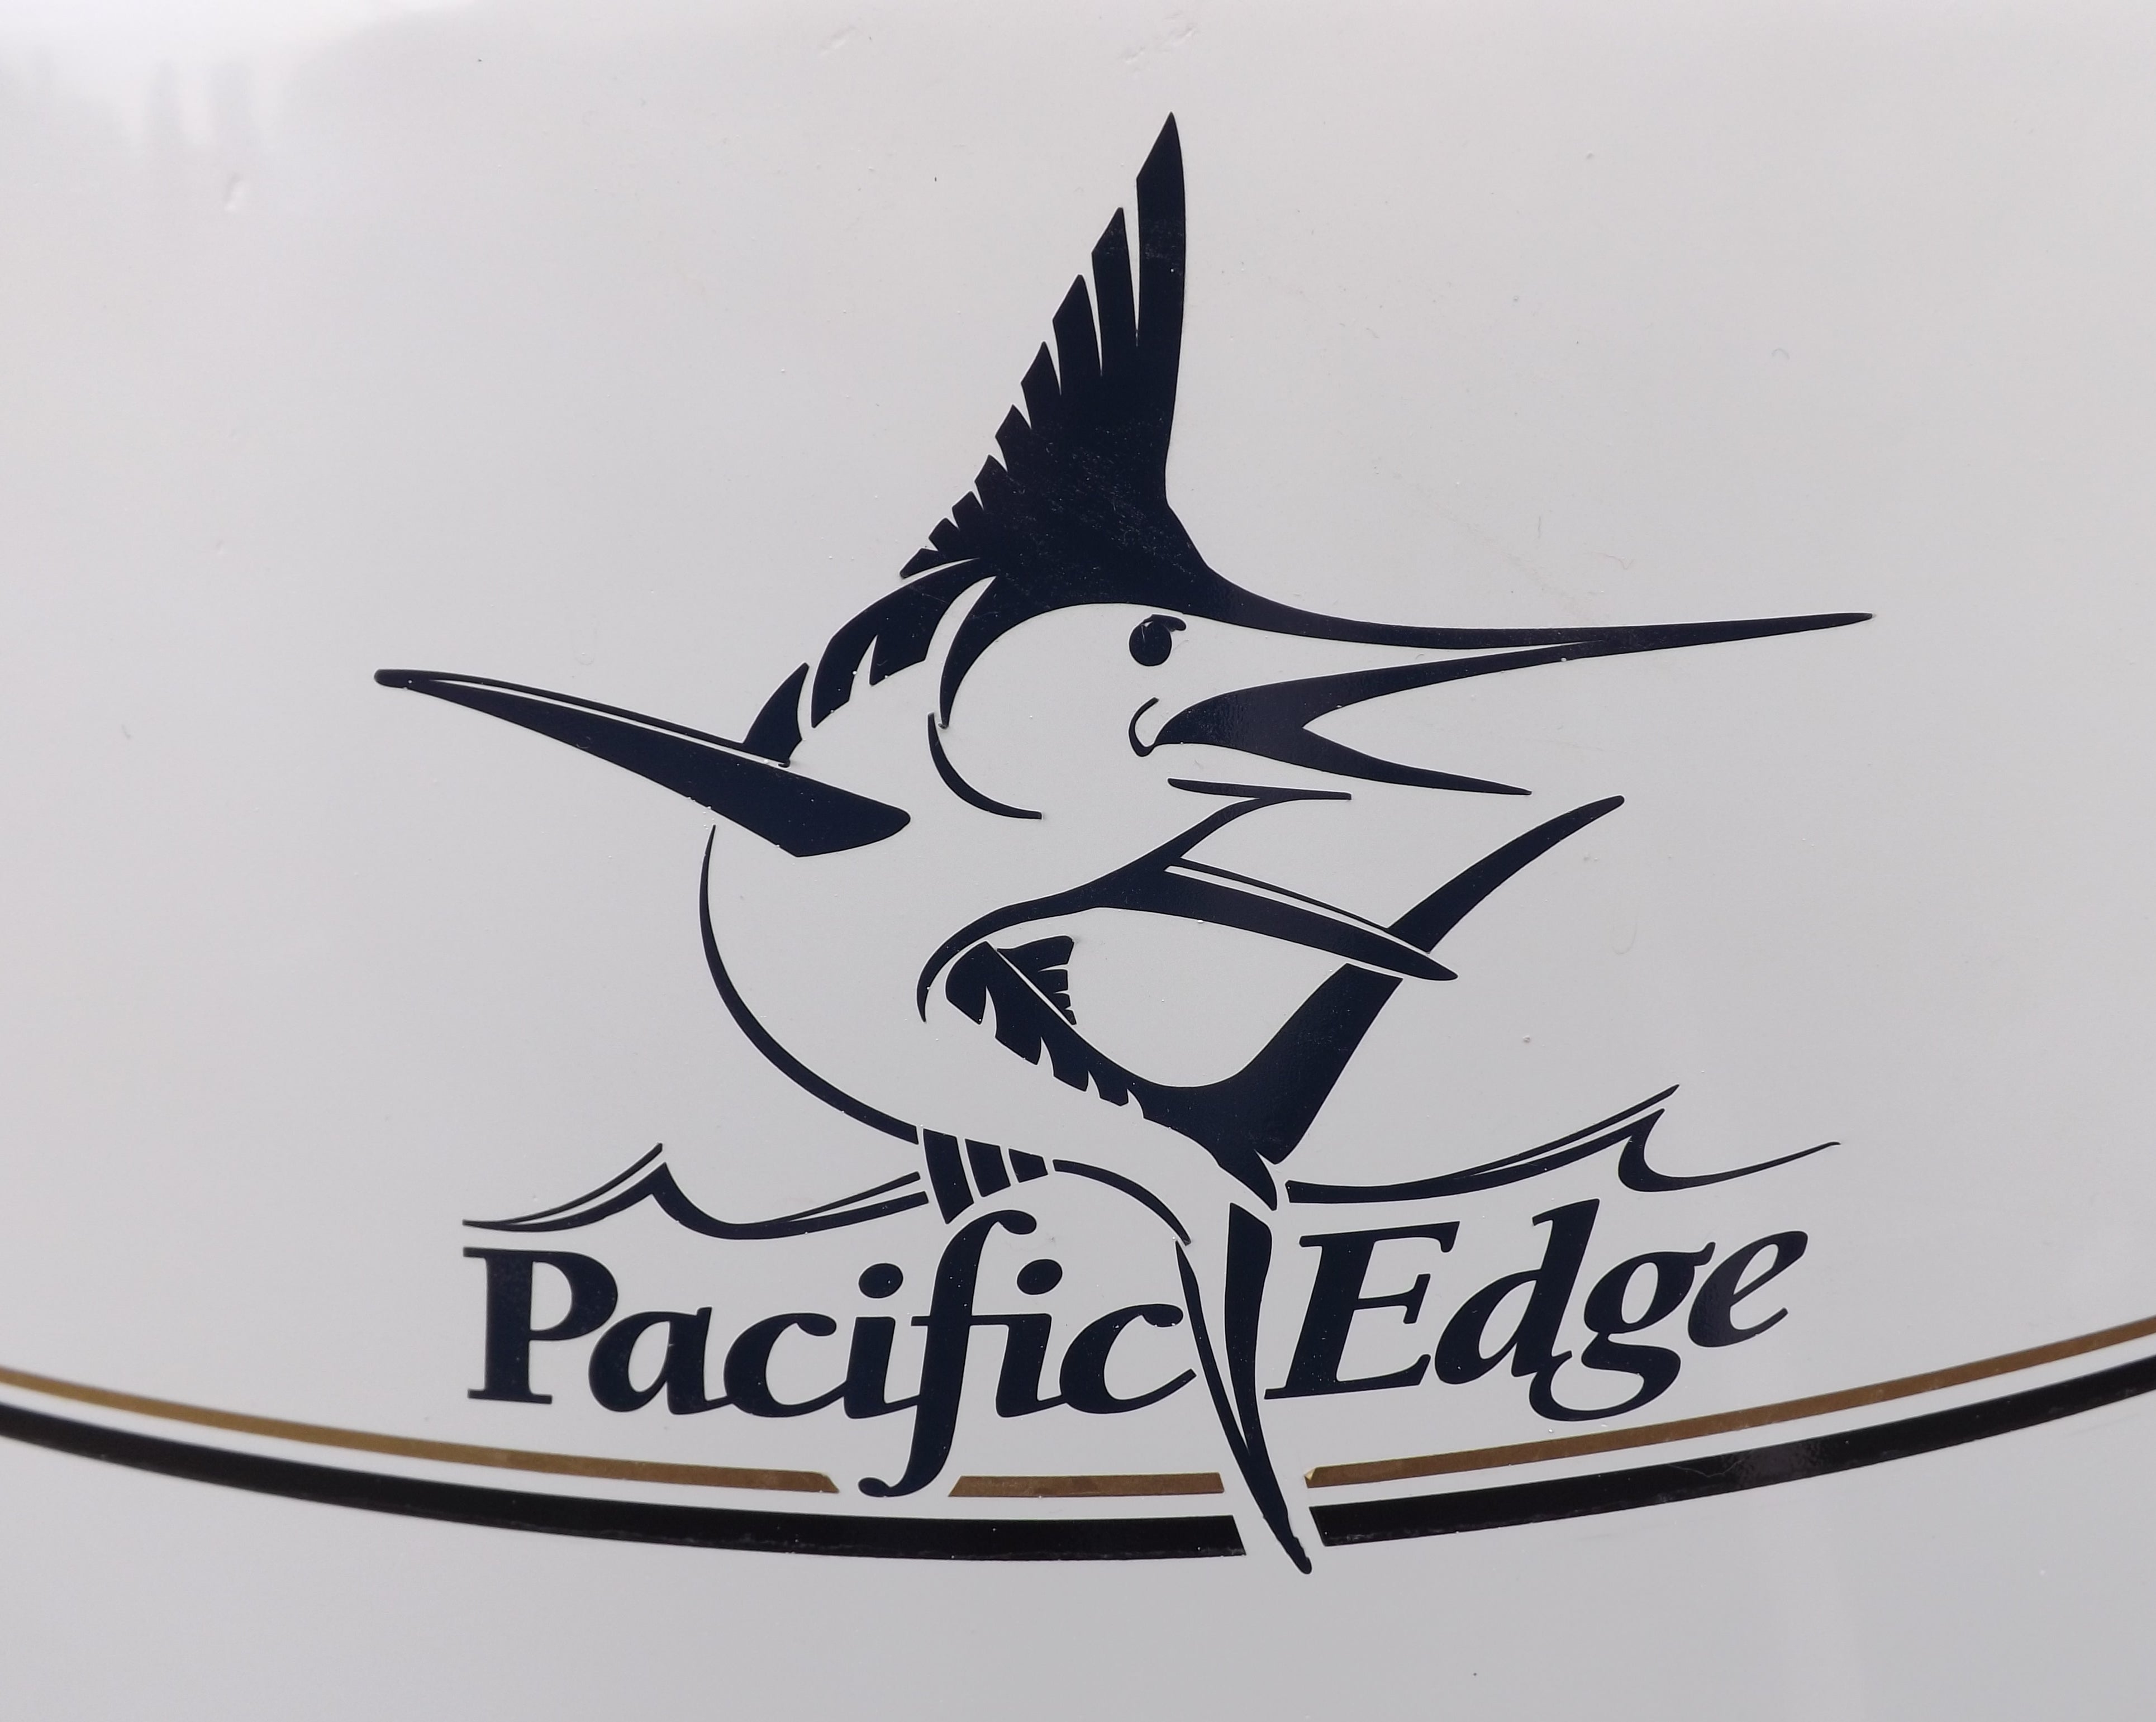 Shop for Bait Tanks – Pacific Edge Tackle